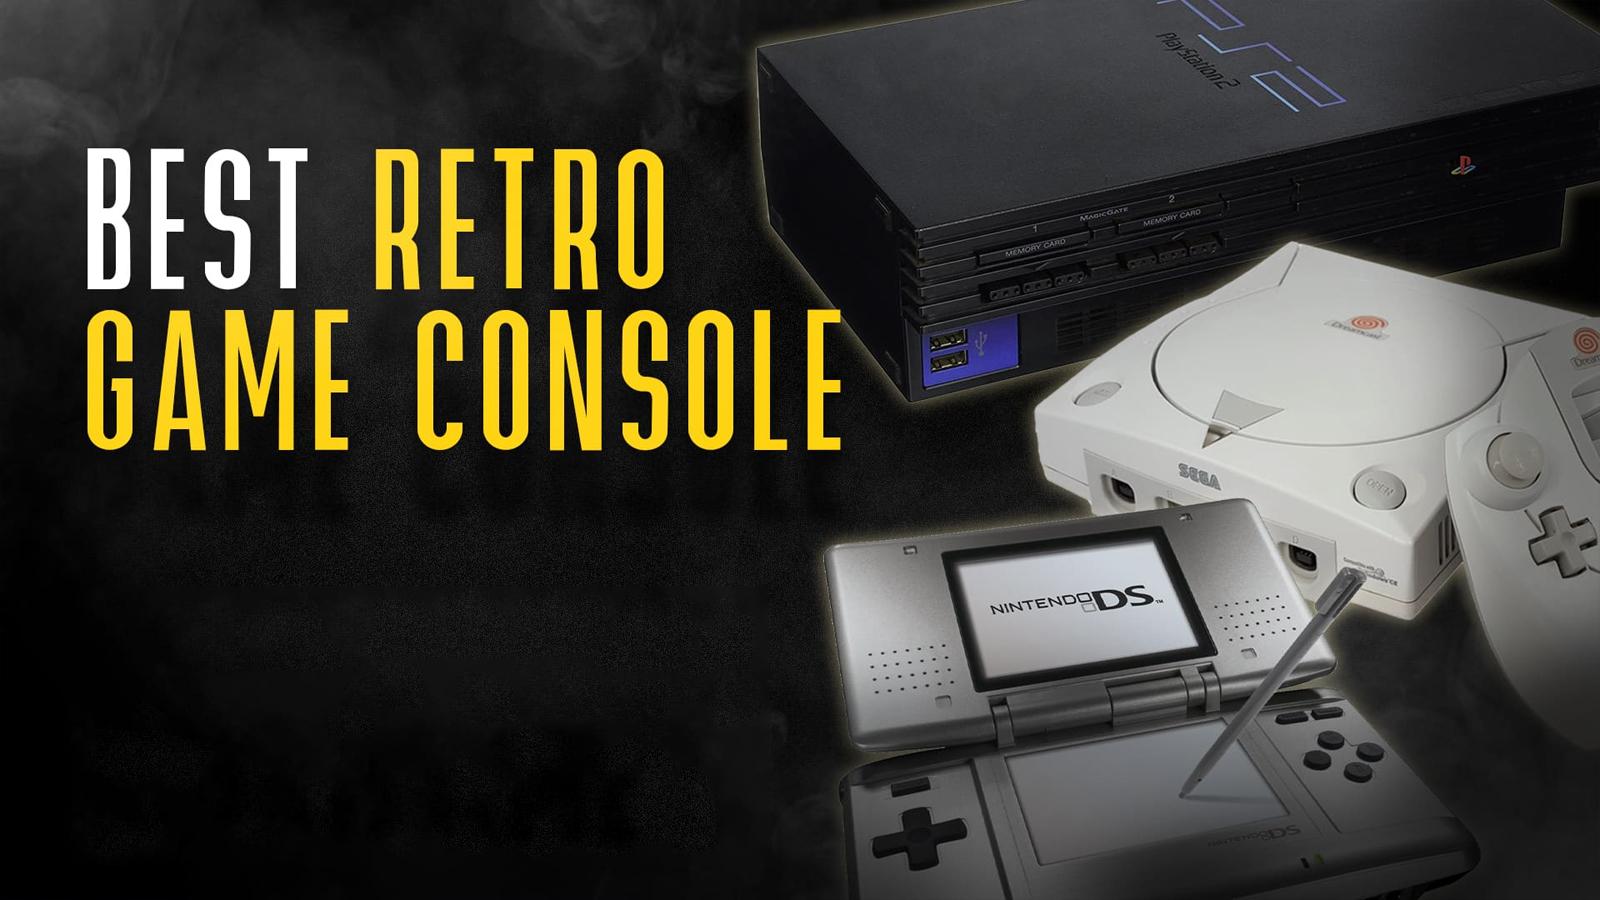 Retro Gaming Nostalgia: Classics never go out of style